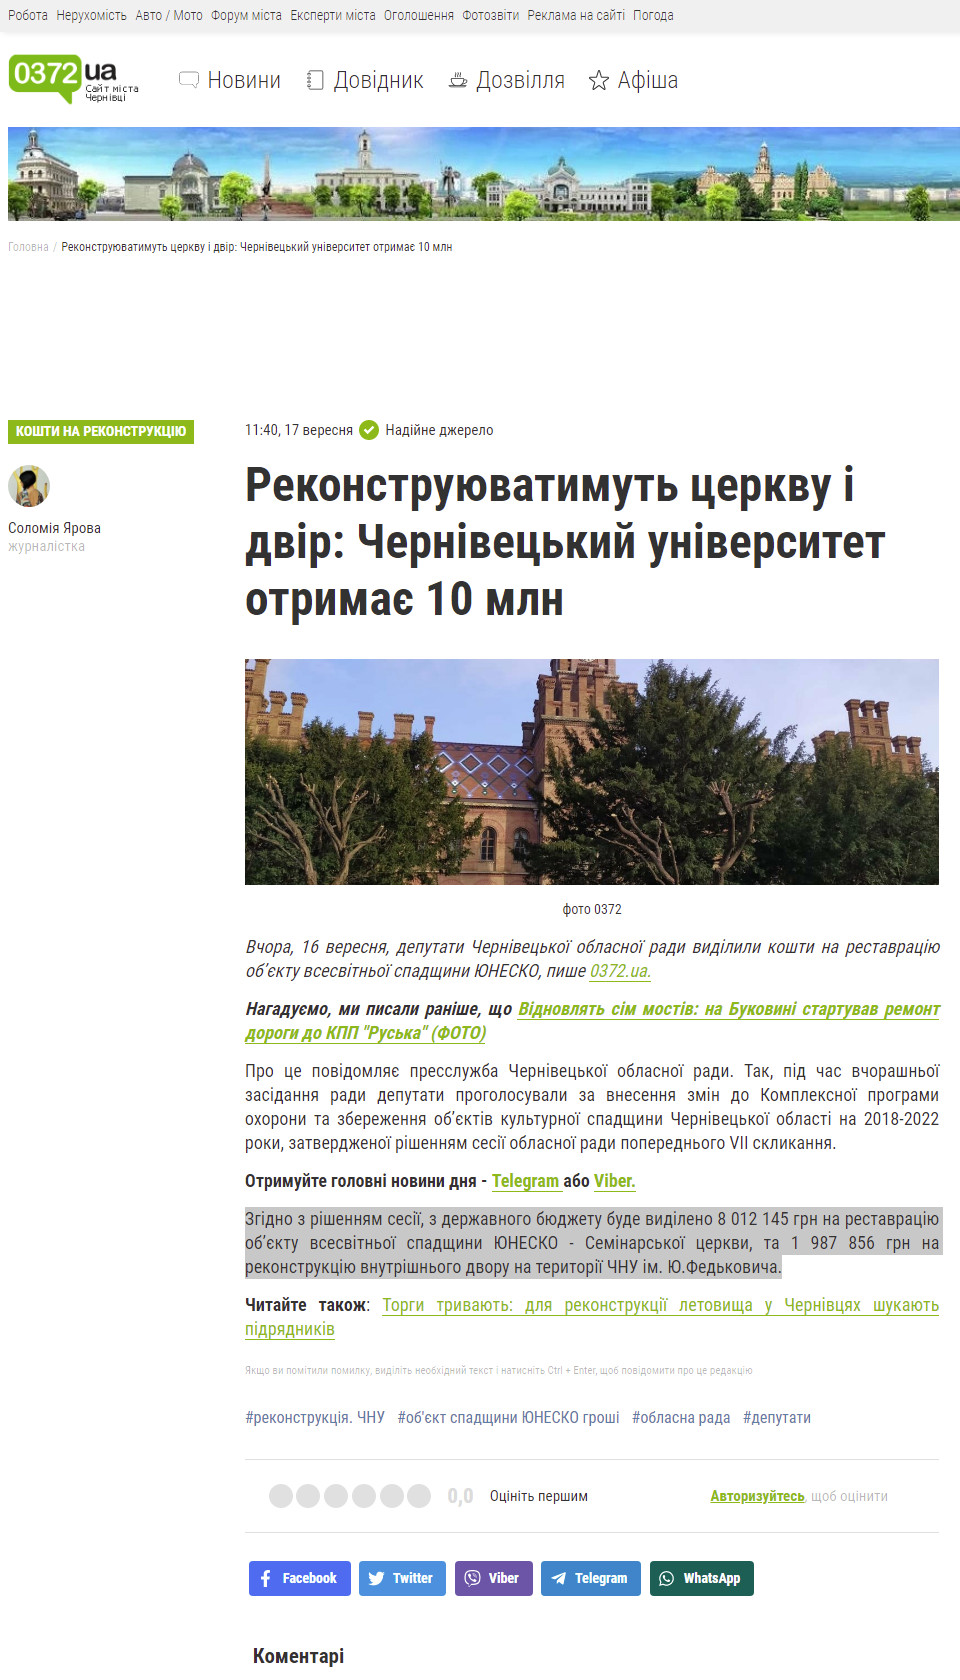 https://www.0372.ua/news/3207822/rekonstruuvatimut-cerkvu-i-dvir-cerniveckij-universitet-otrimae-10-mln